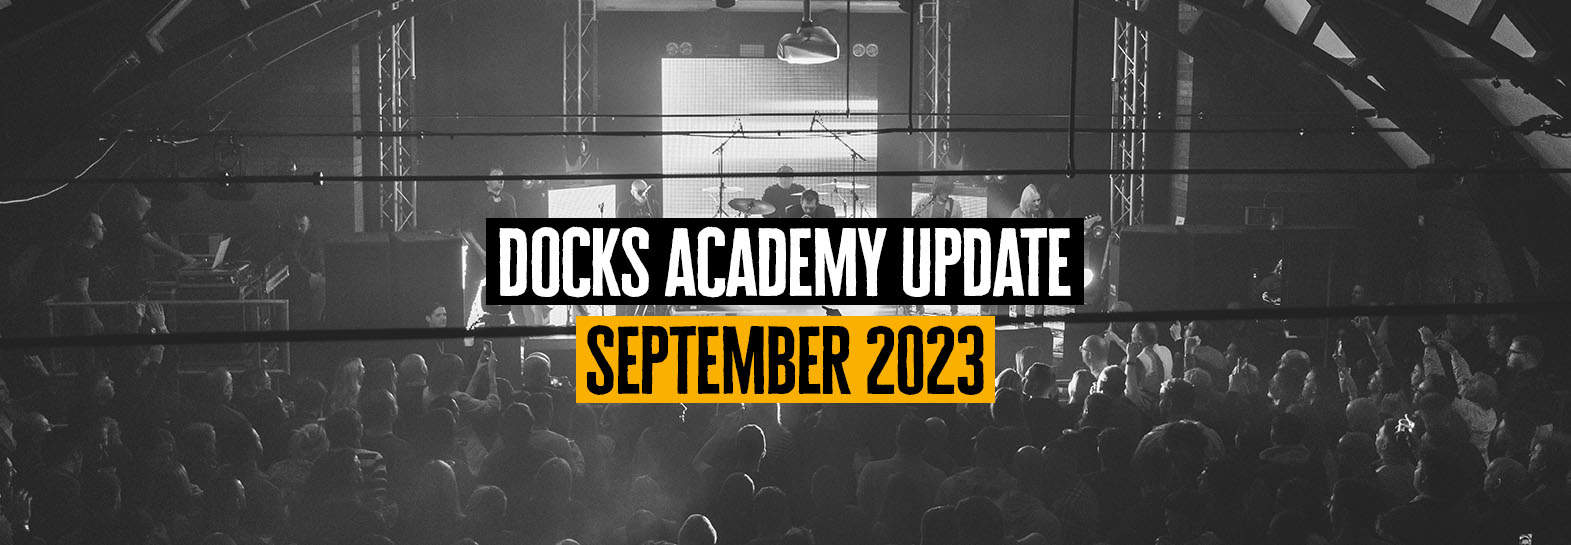 Docks Academy Update Header Image